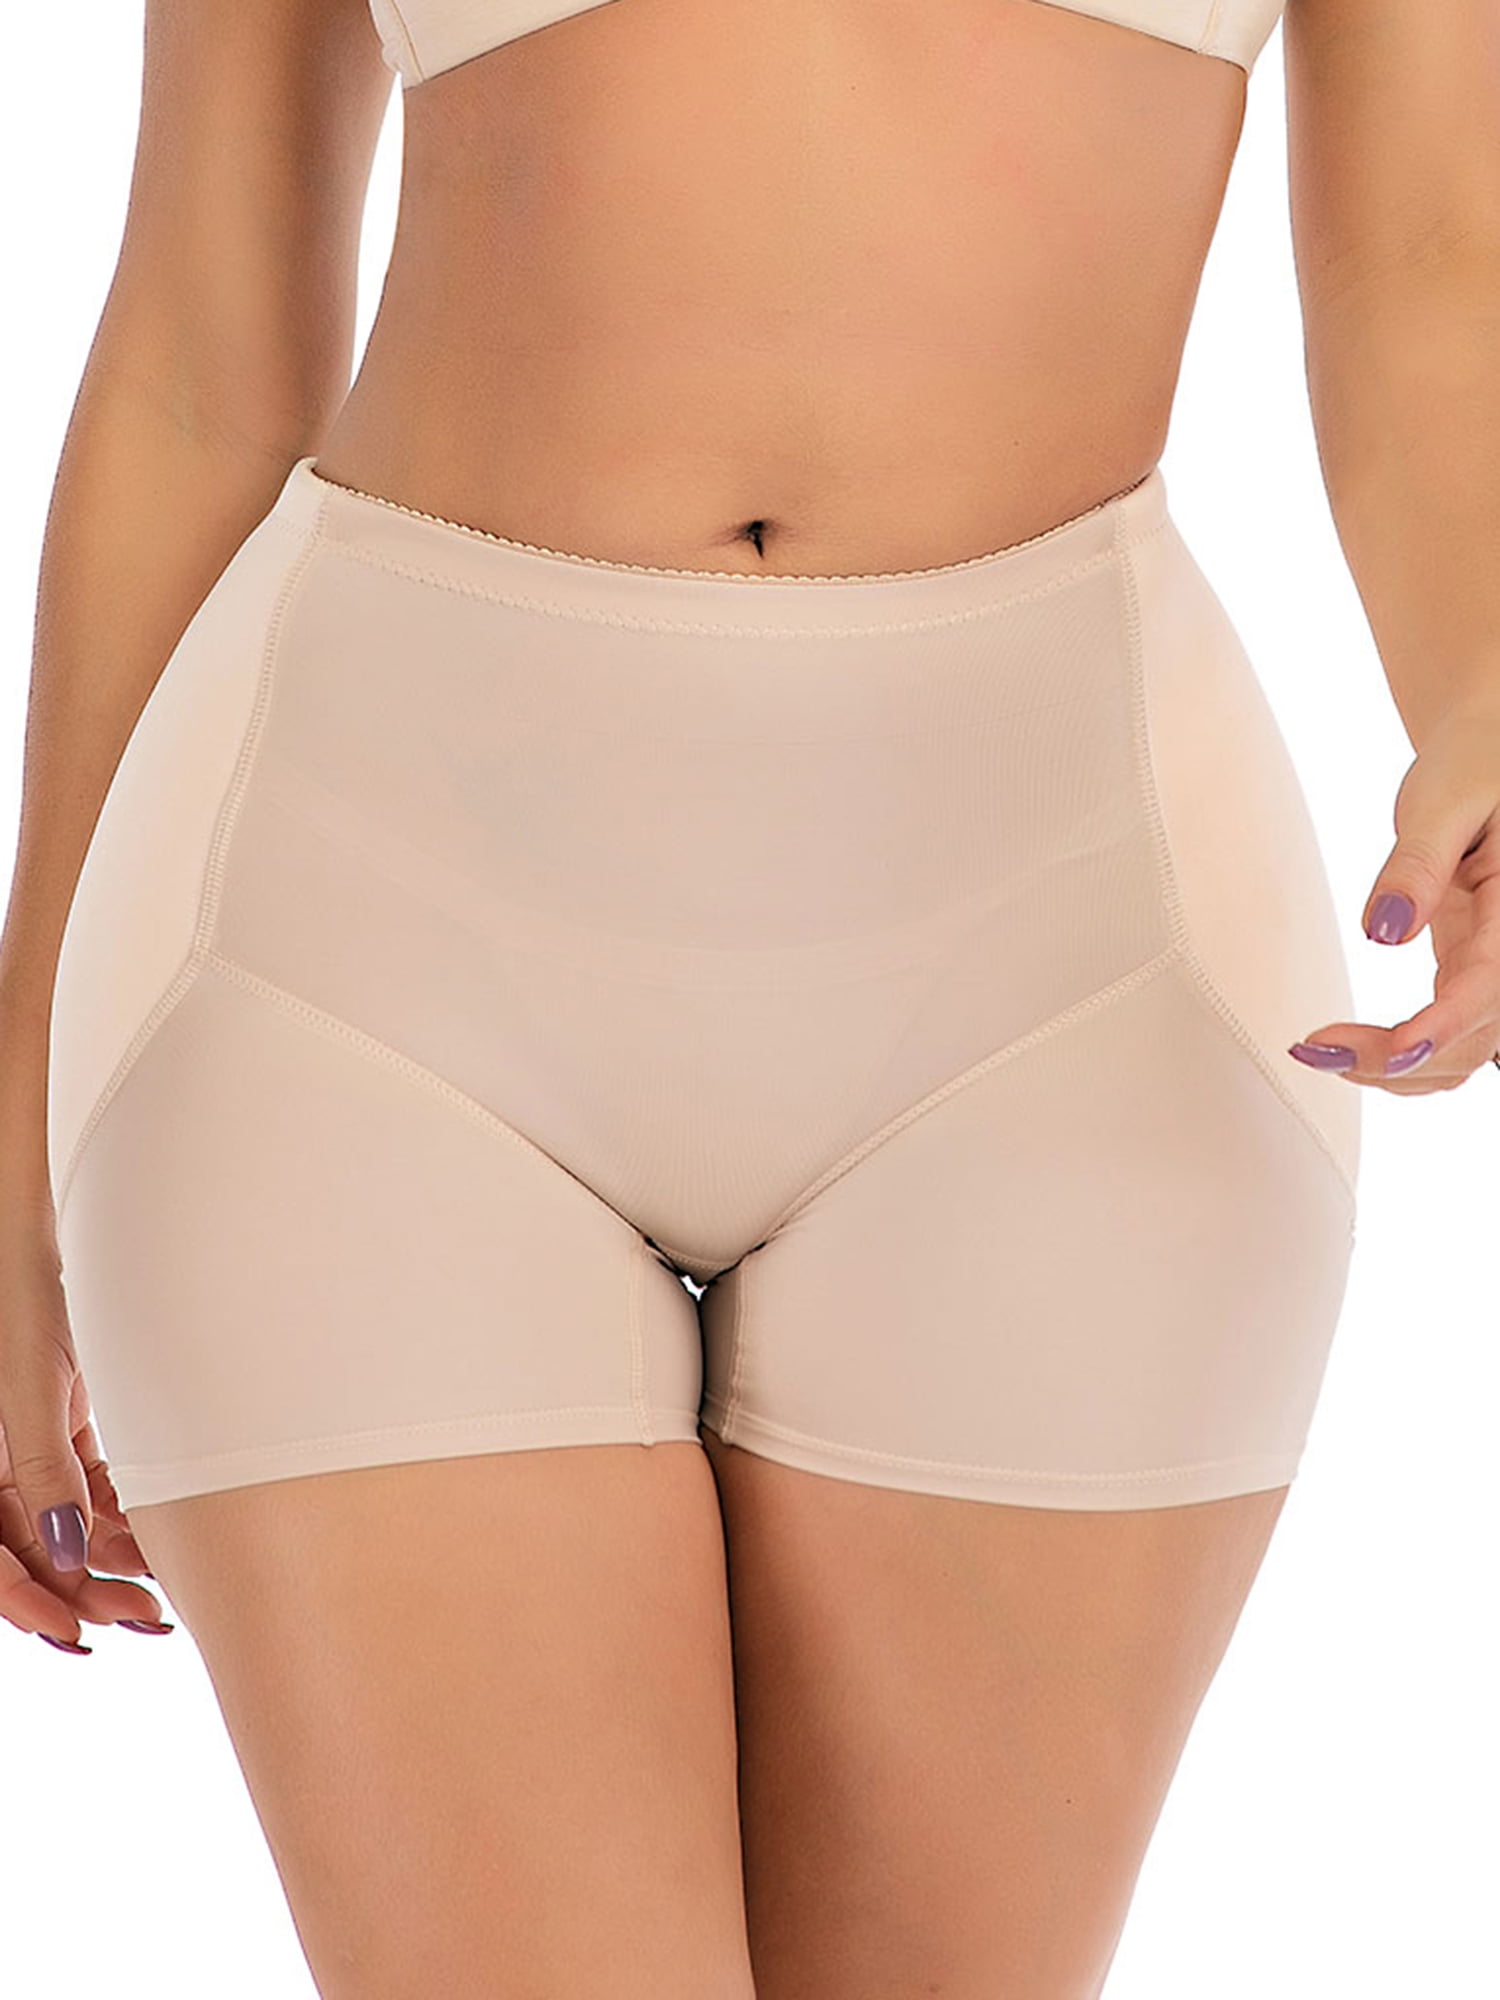 Four-Padded Push-Up Foam Hip and Butt Enhancer Panties - Sodacoda Online  Store